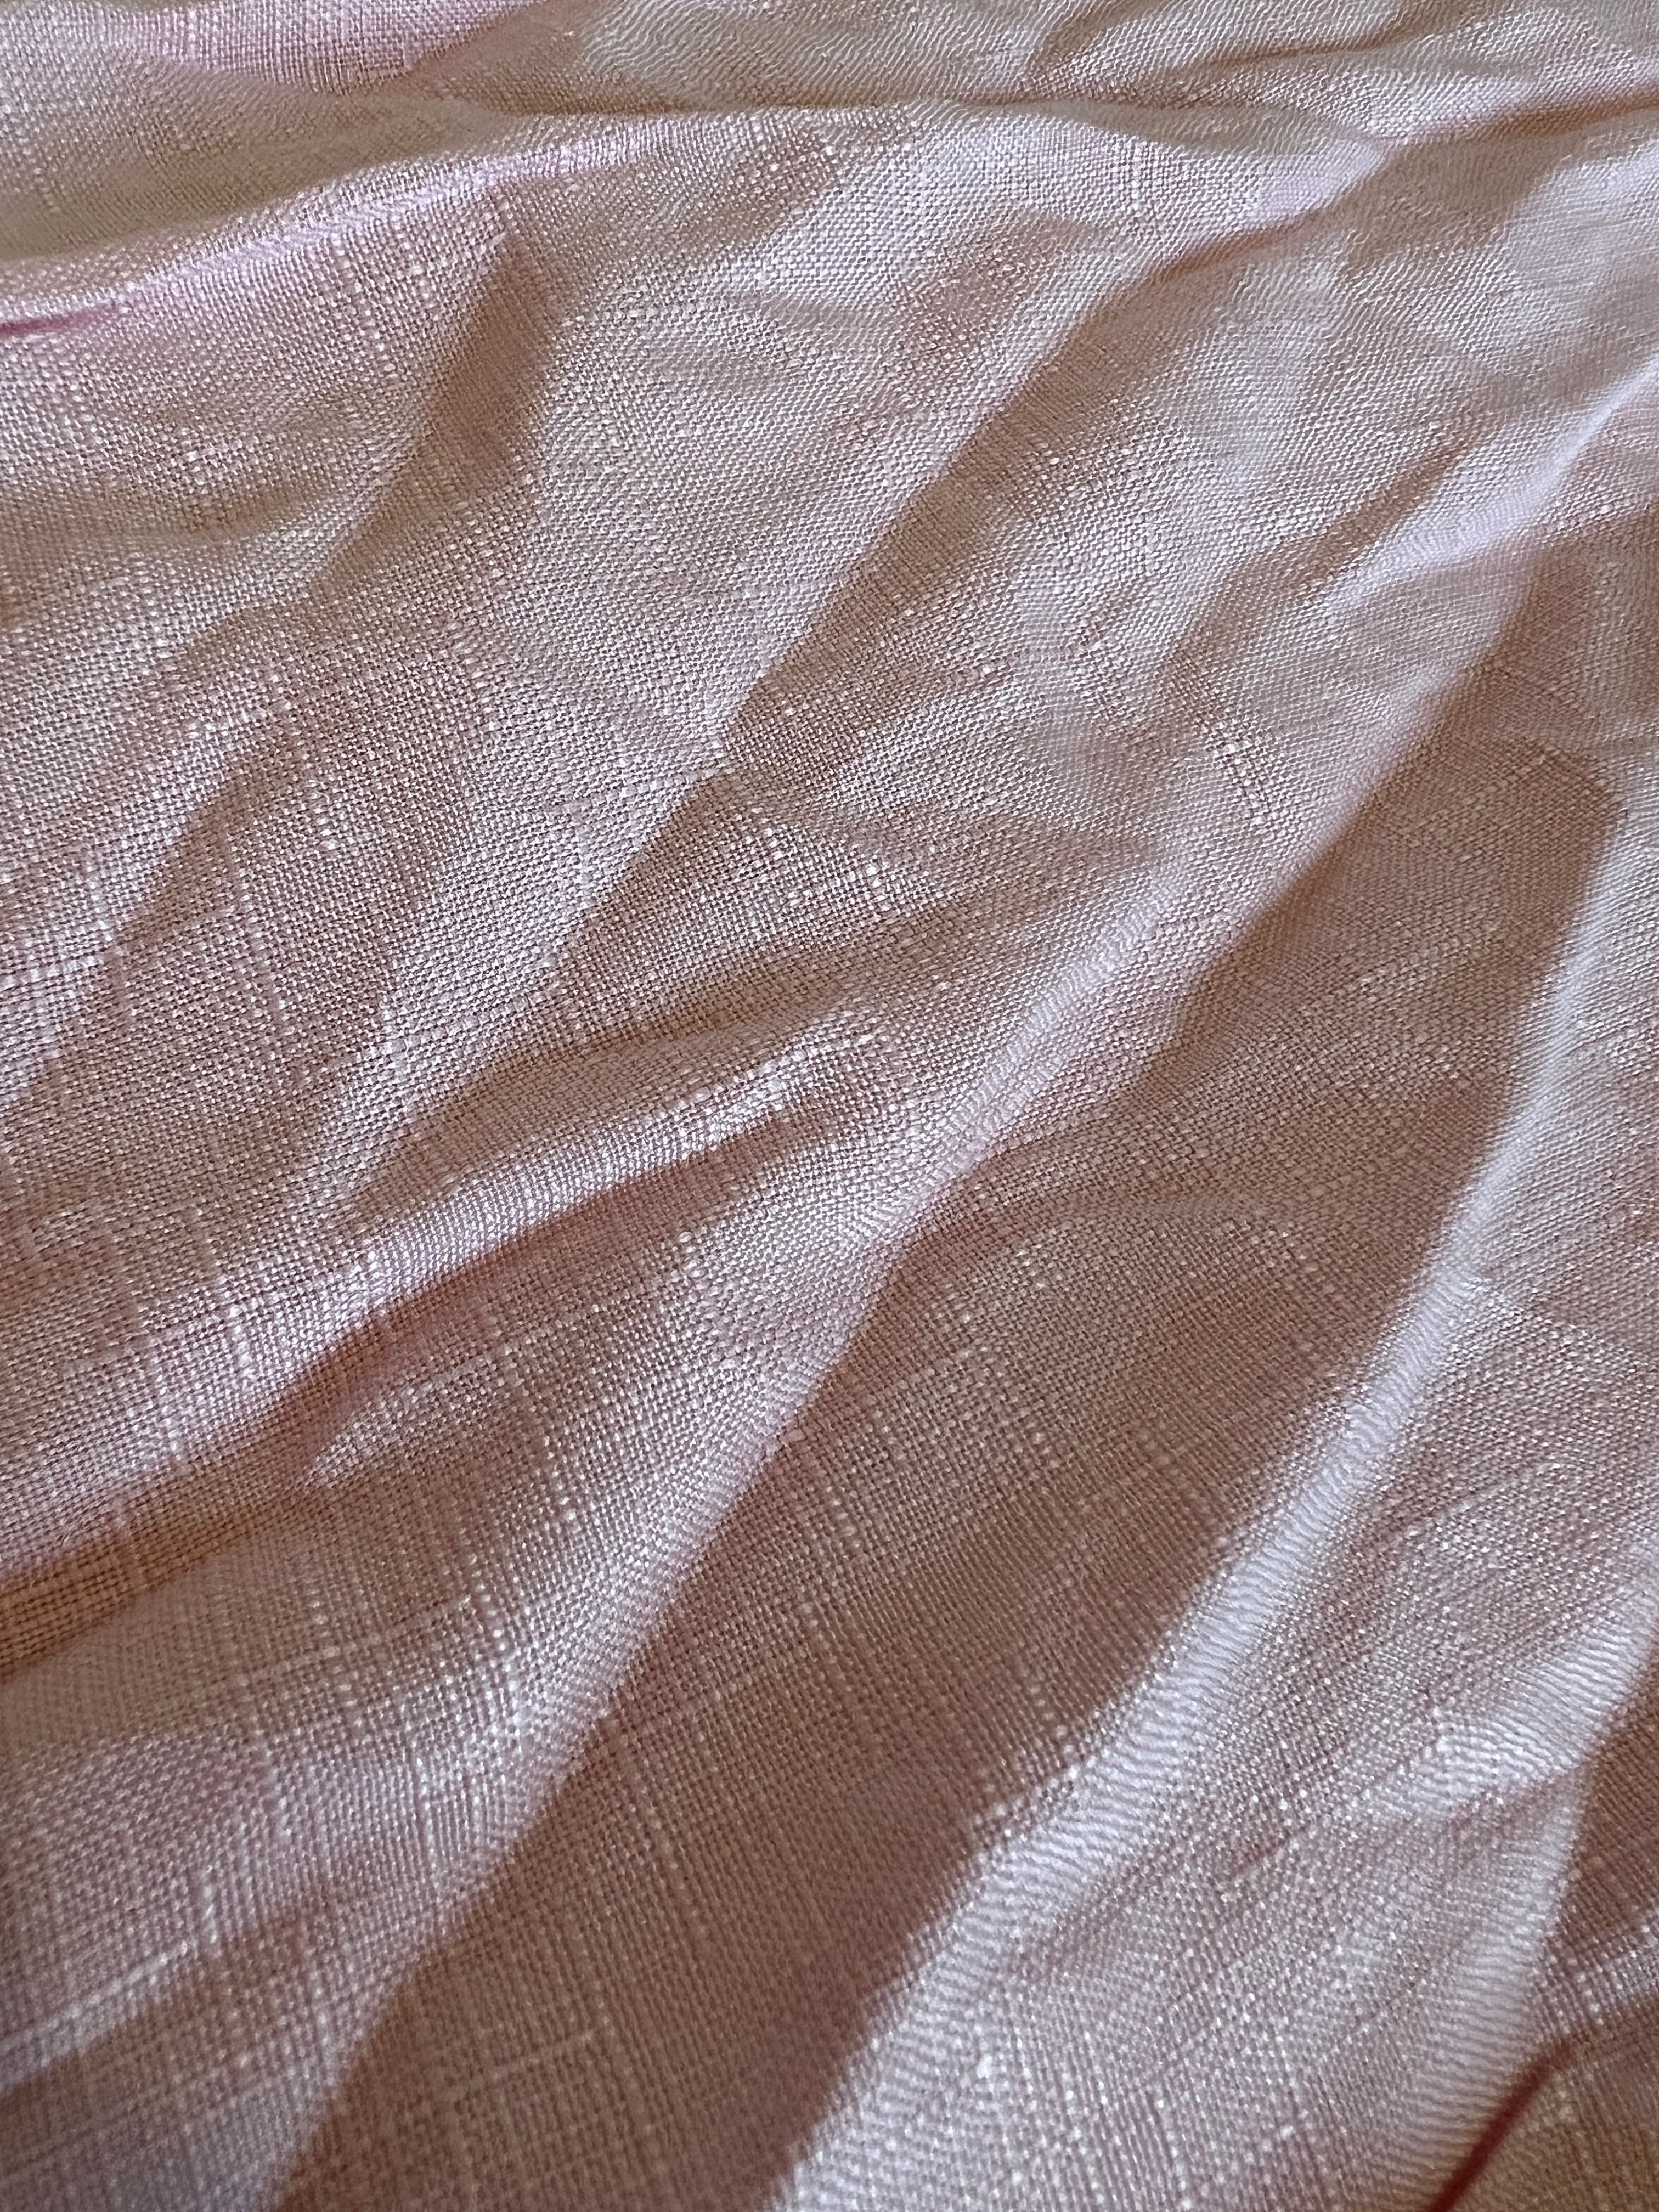 Różowa bluzka / koszulka / top bez rękawów / bezrękawnik